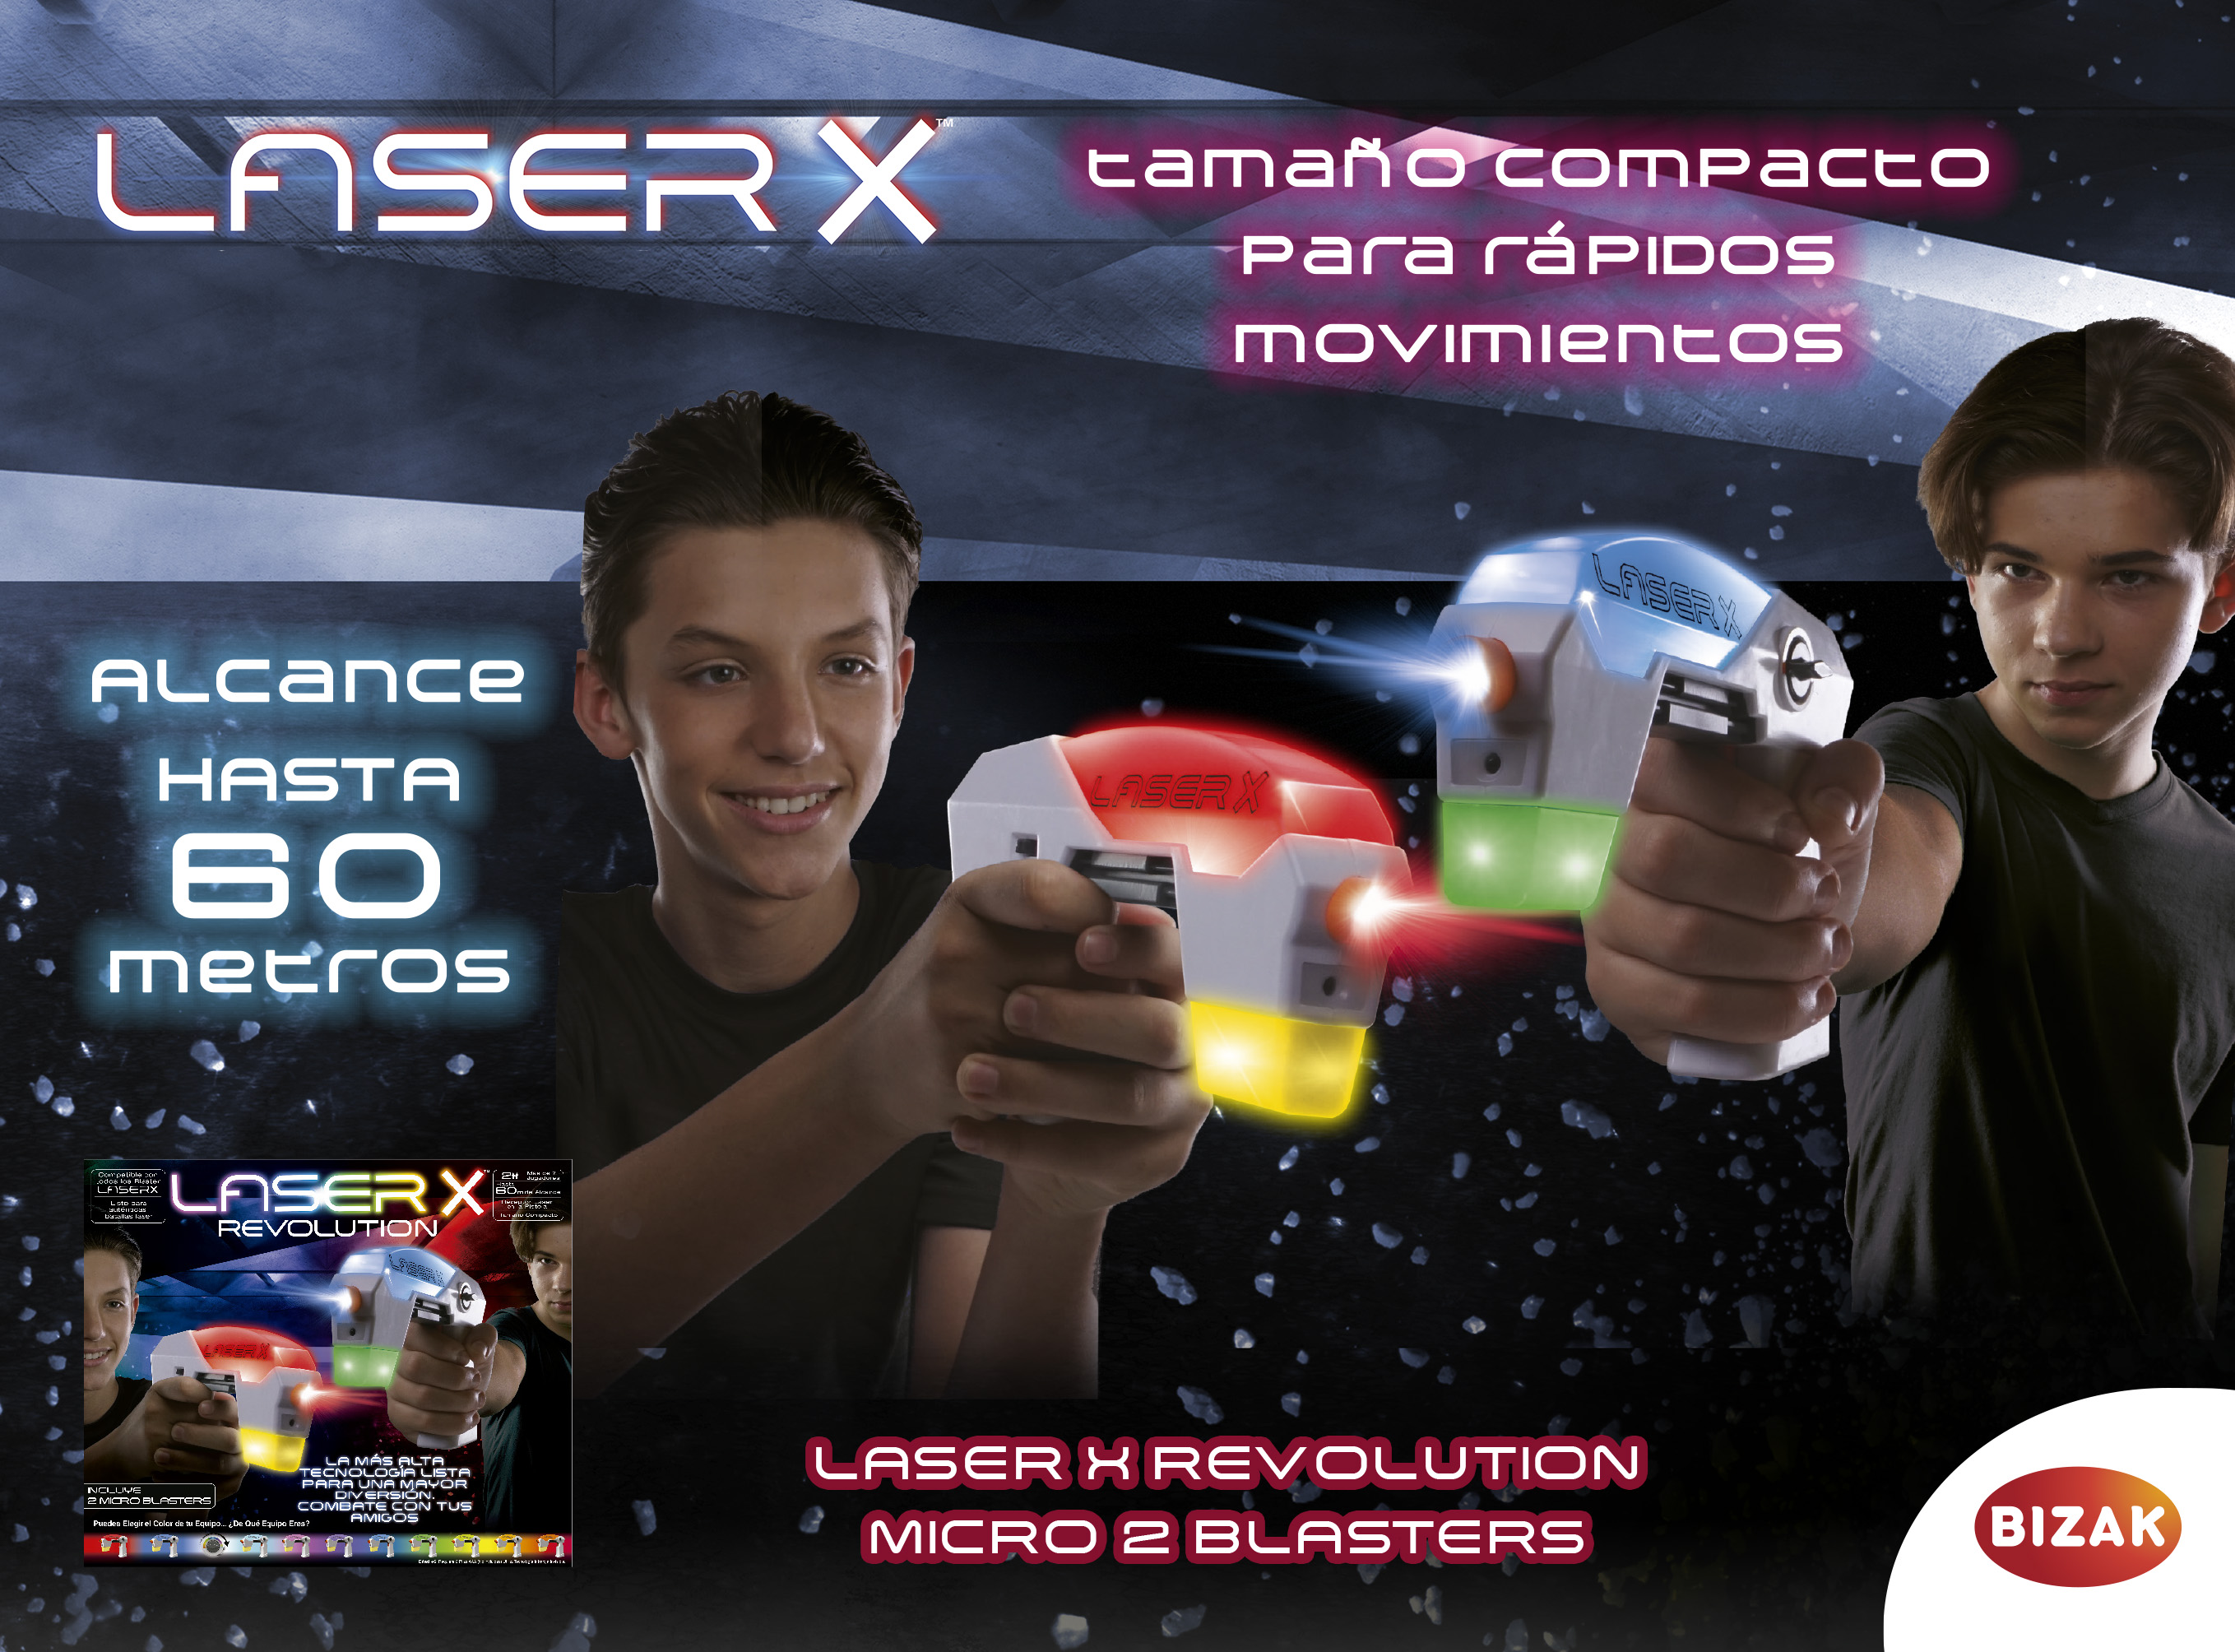 laser x revolution micro b2 blasters ( bizak 62948168)